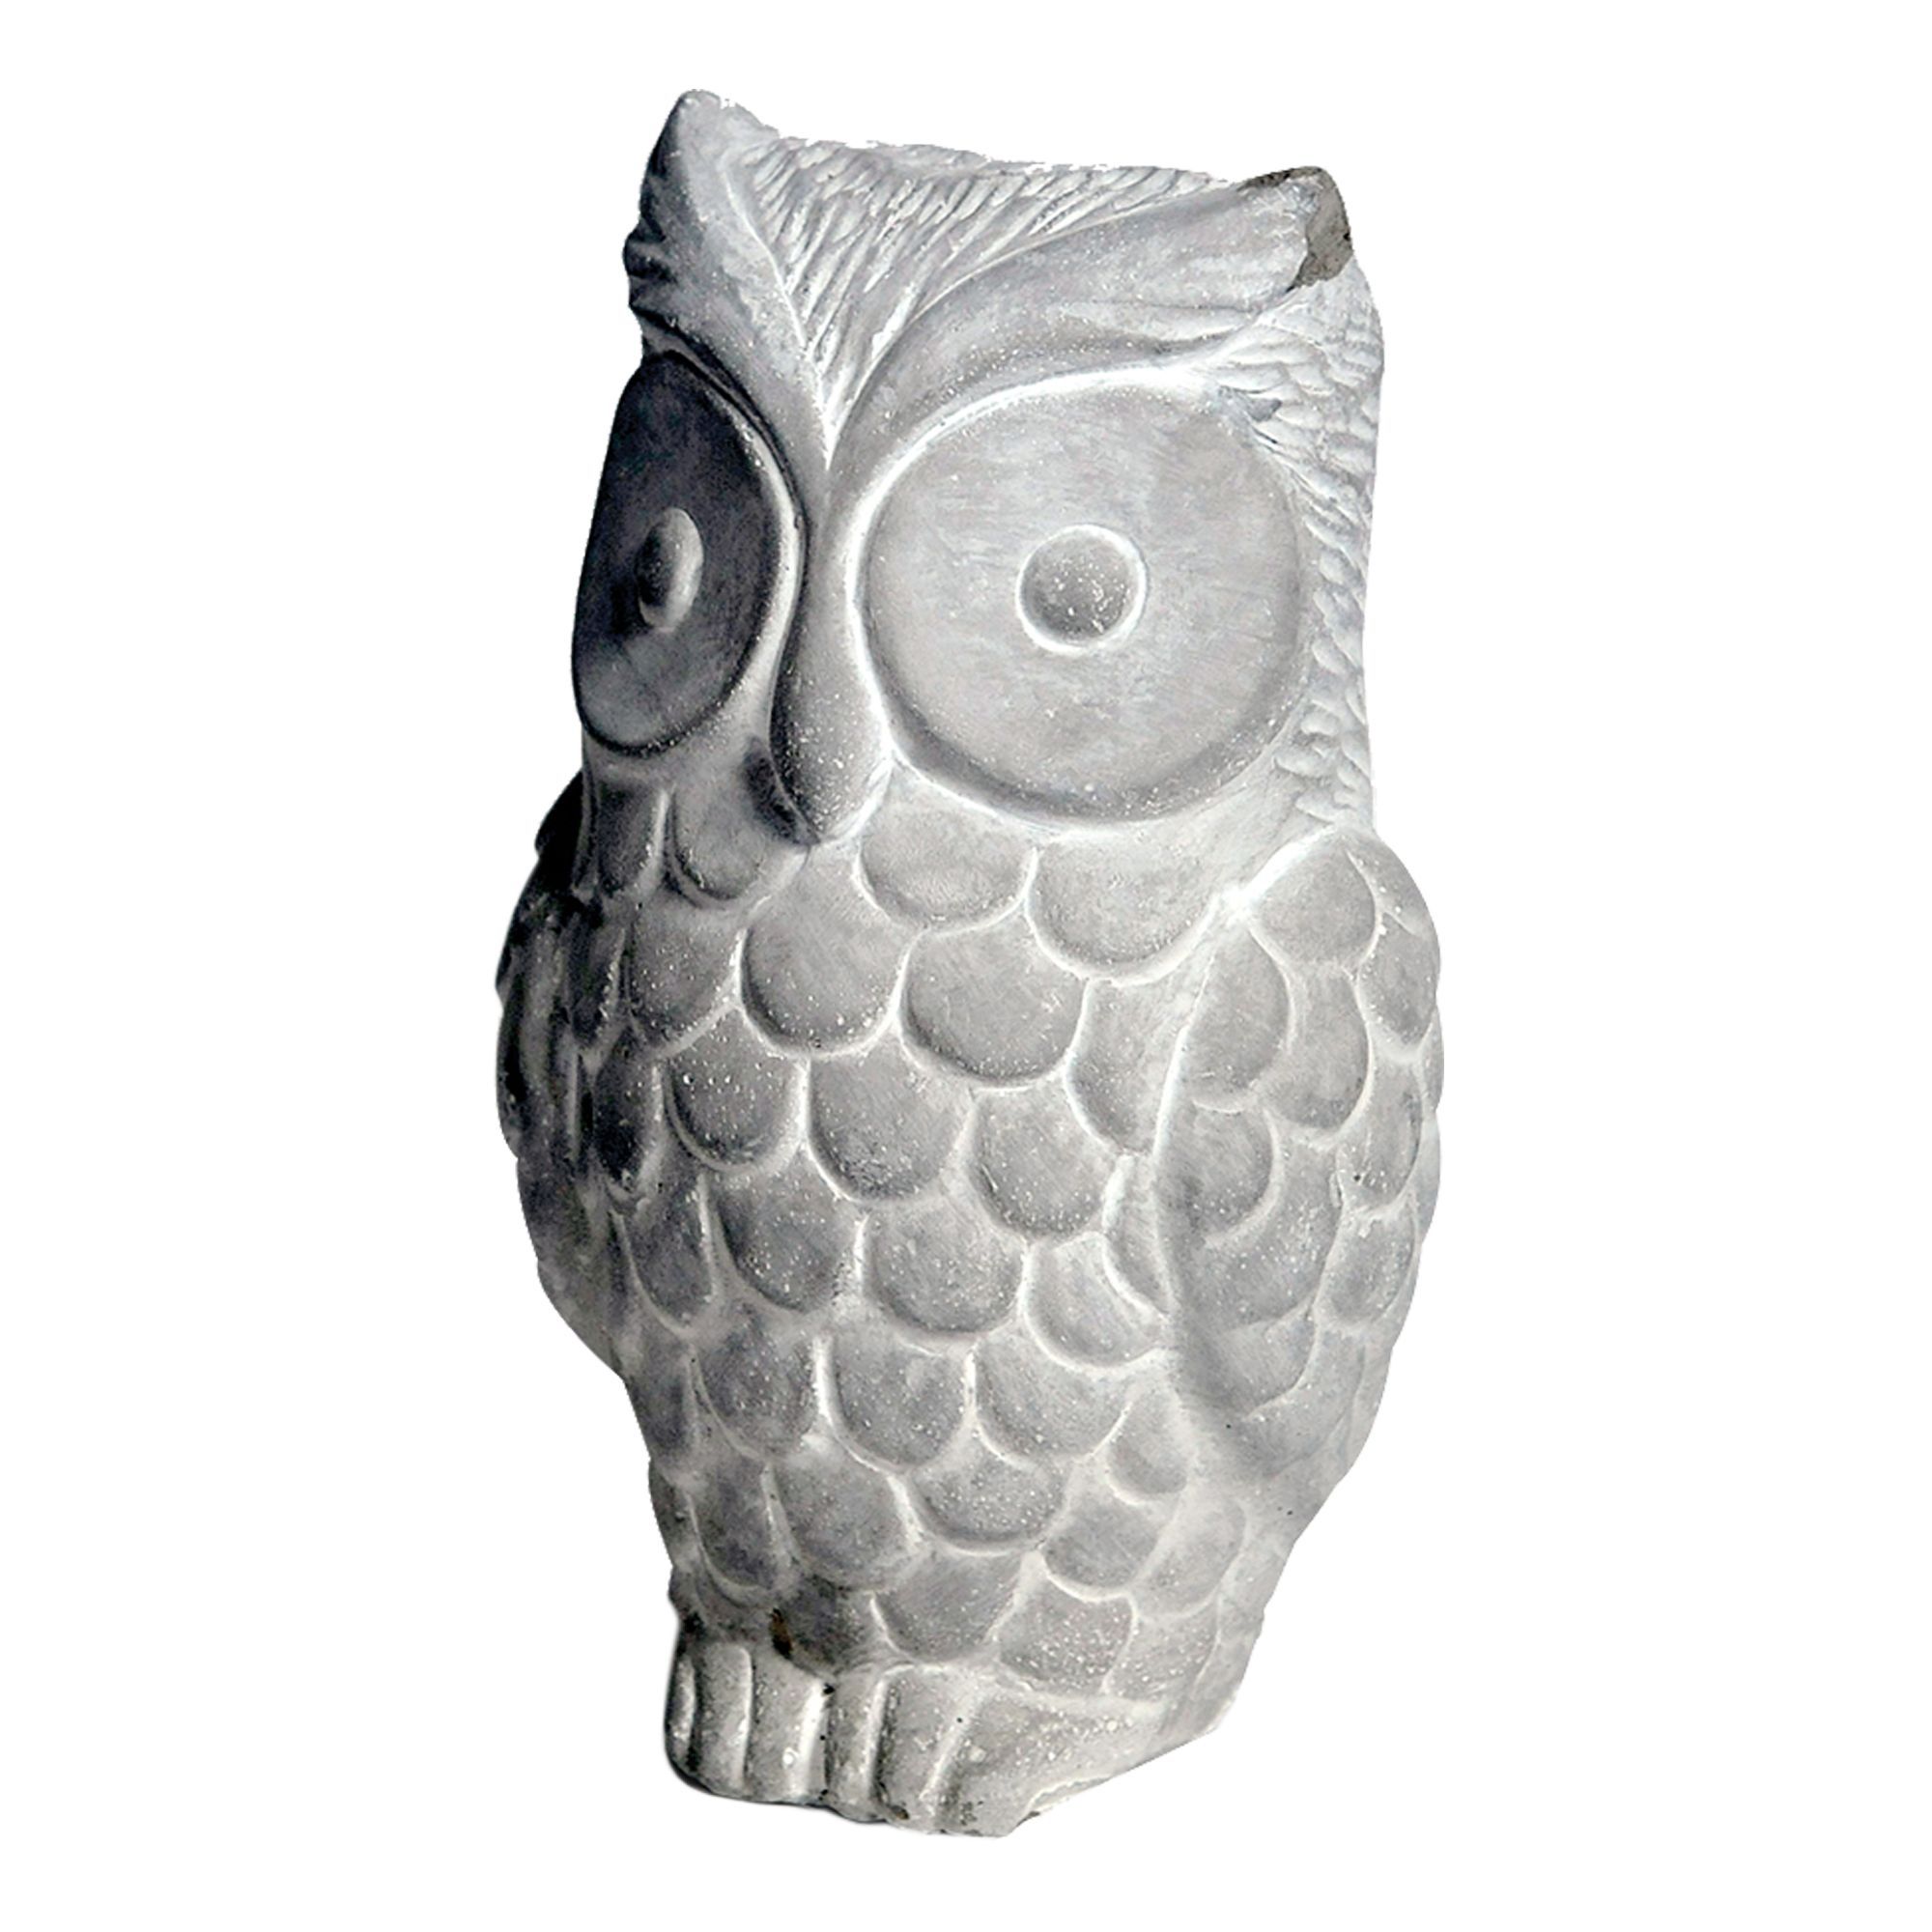 Small owl Garden ornament